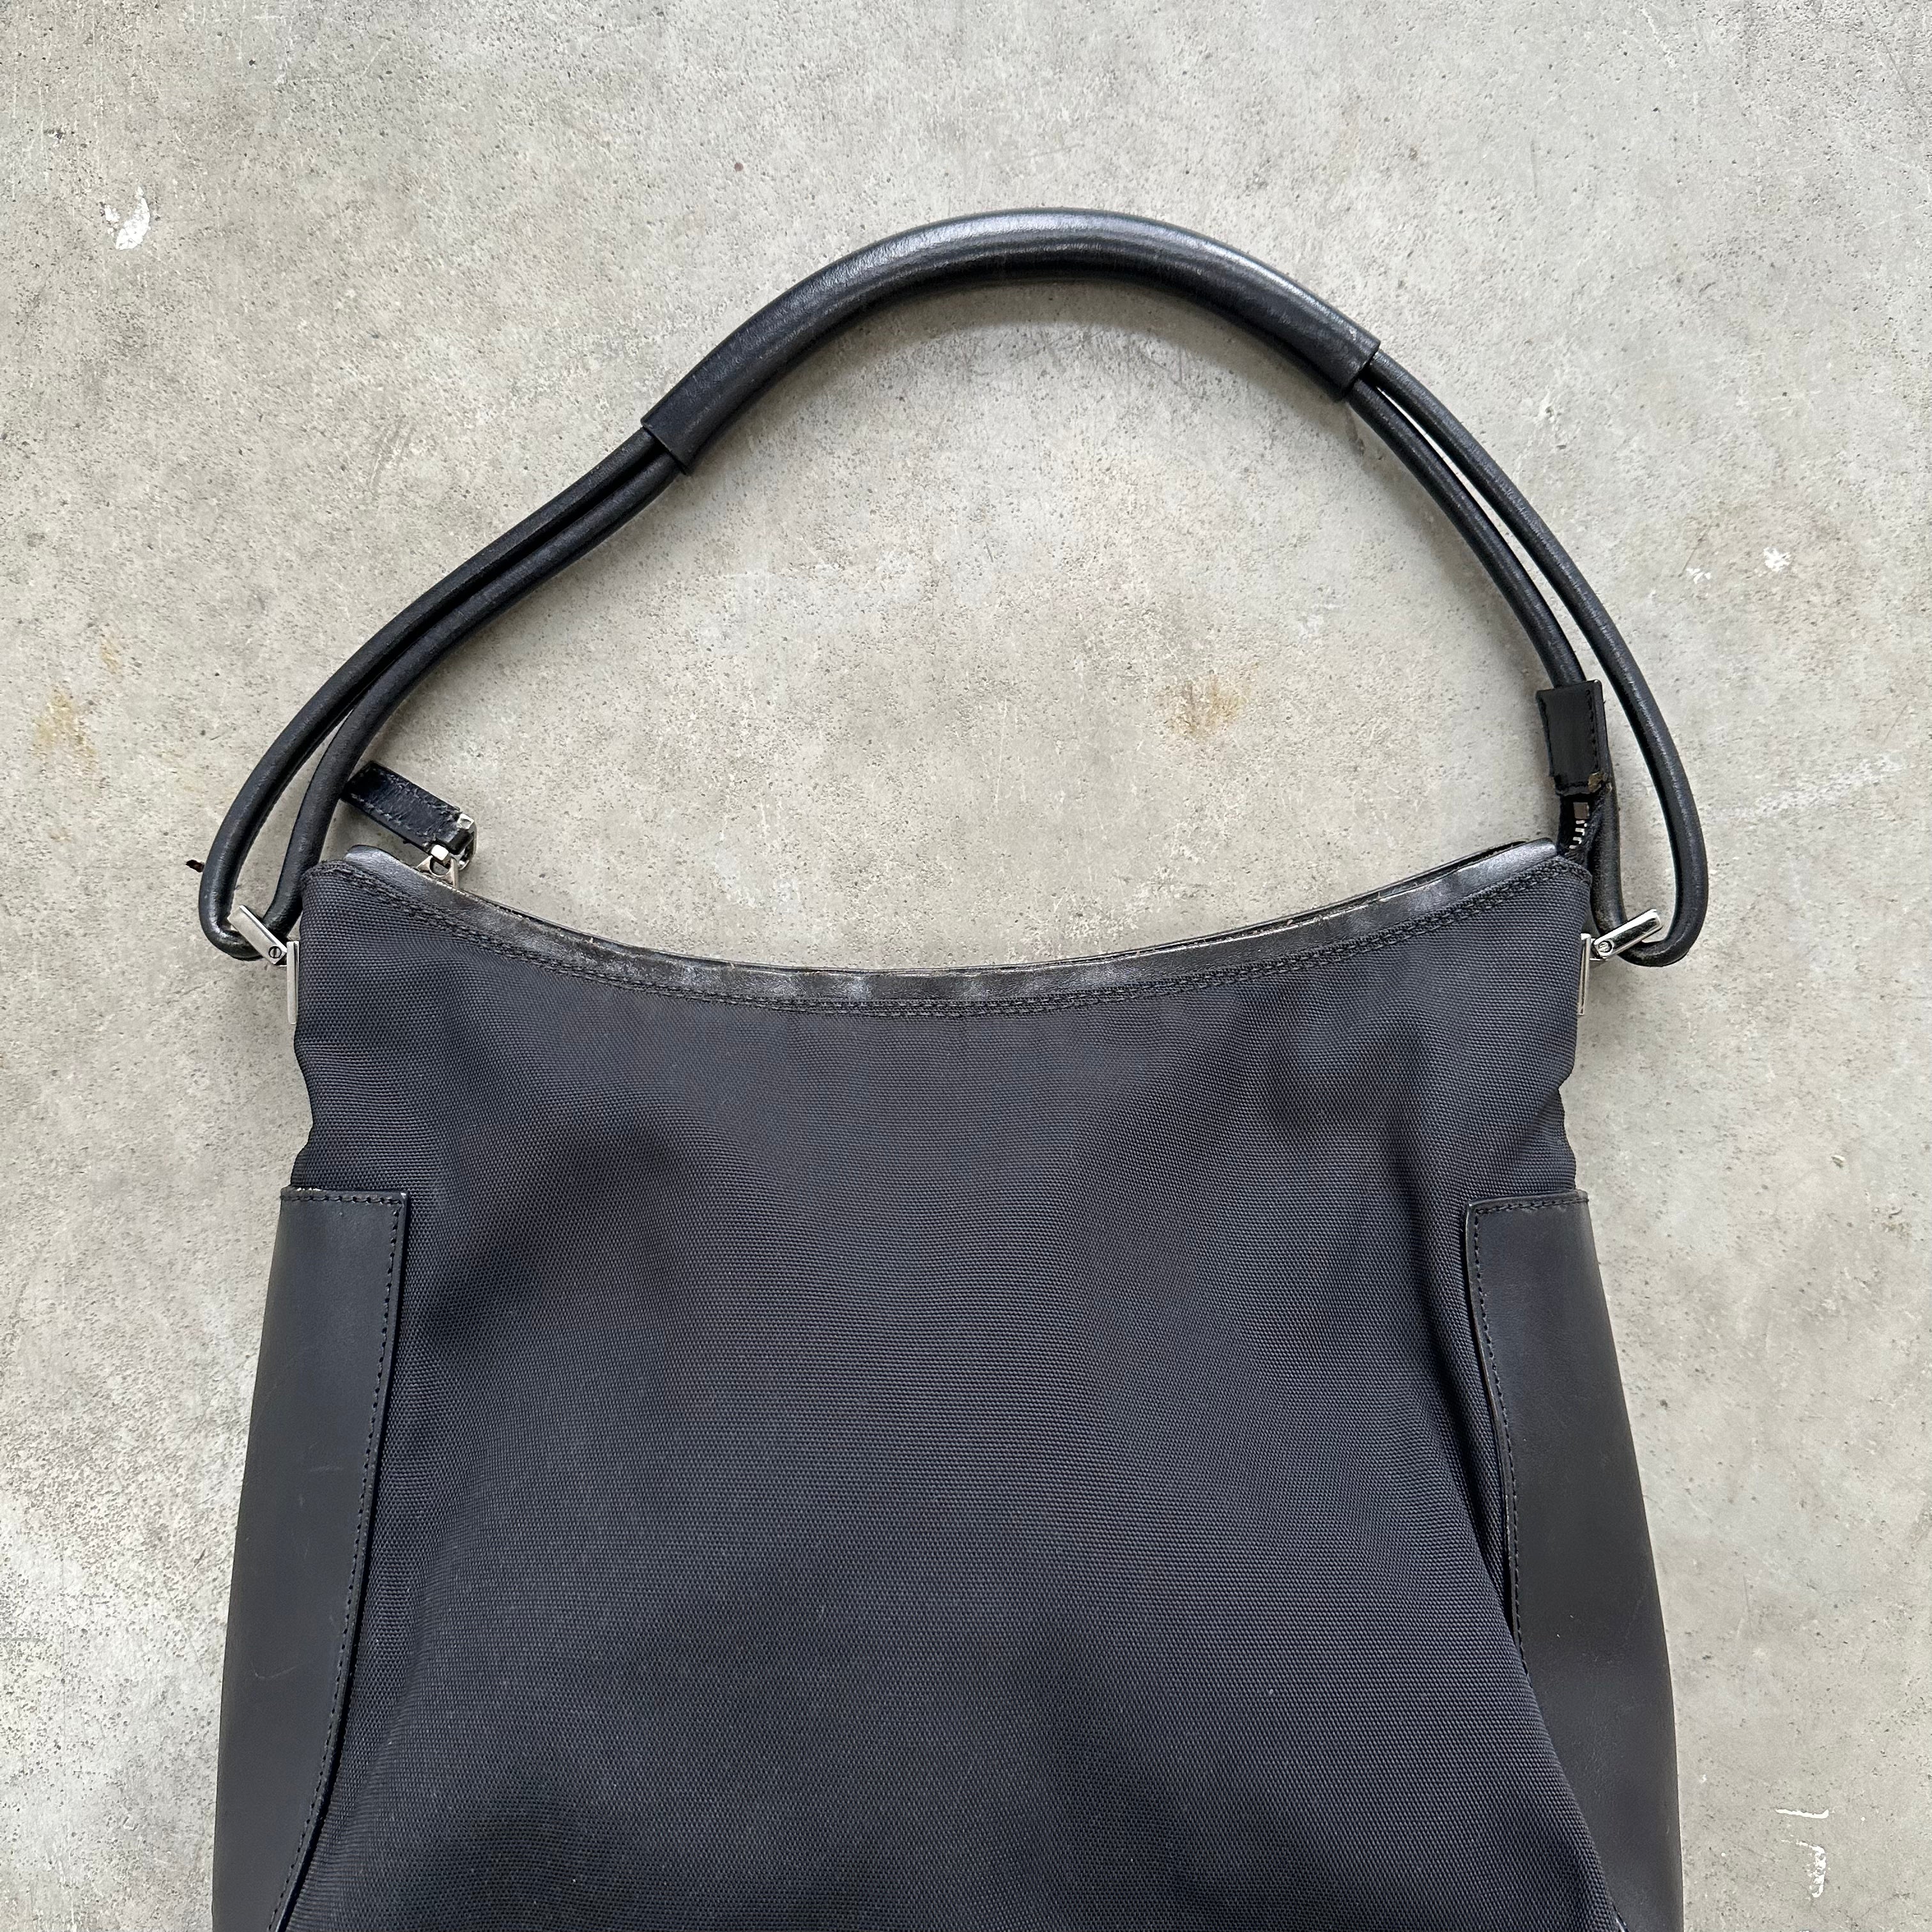 Gucci Black Shoulder Bag Nylon and Leather